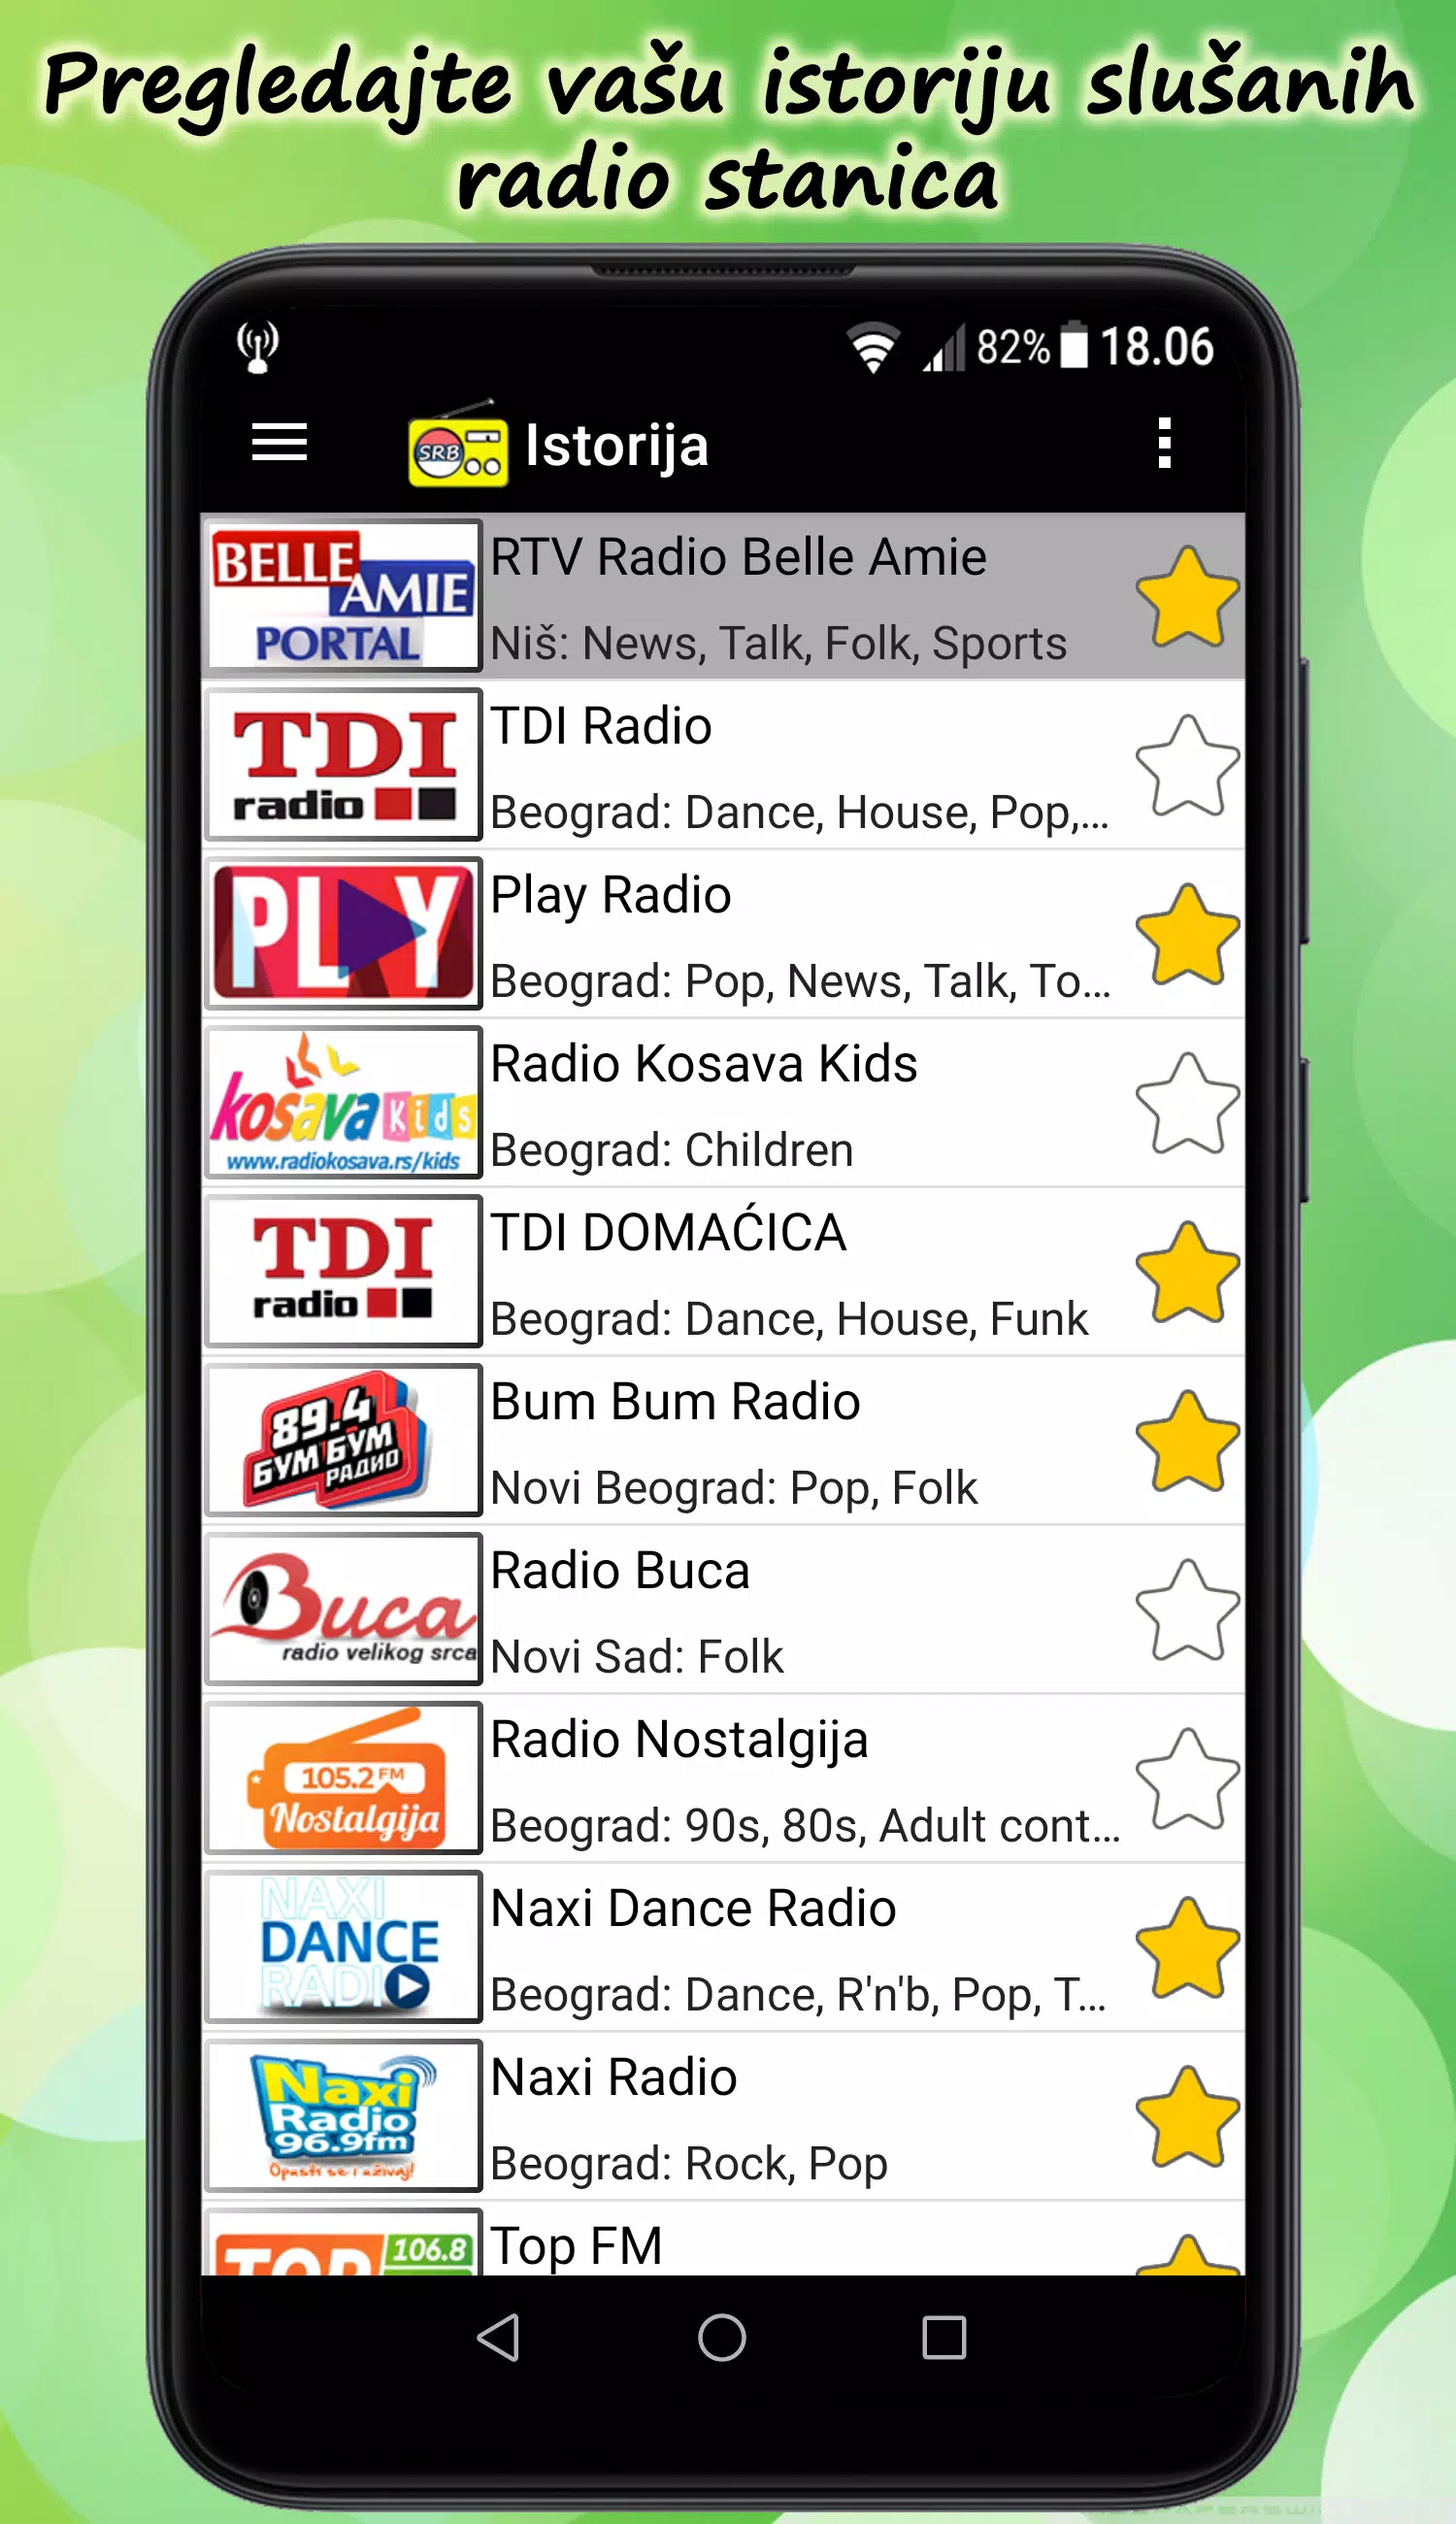 Radio Srbija FM Online for Android - APK Download